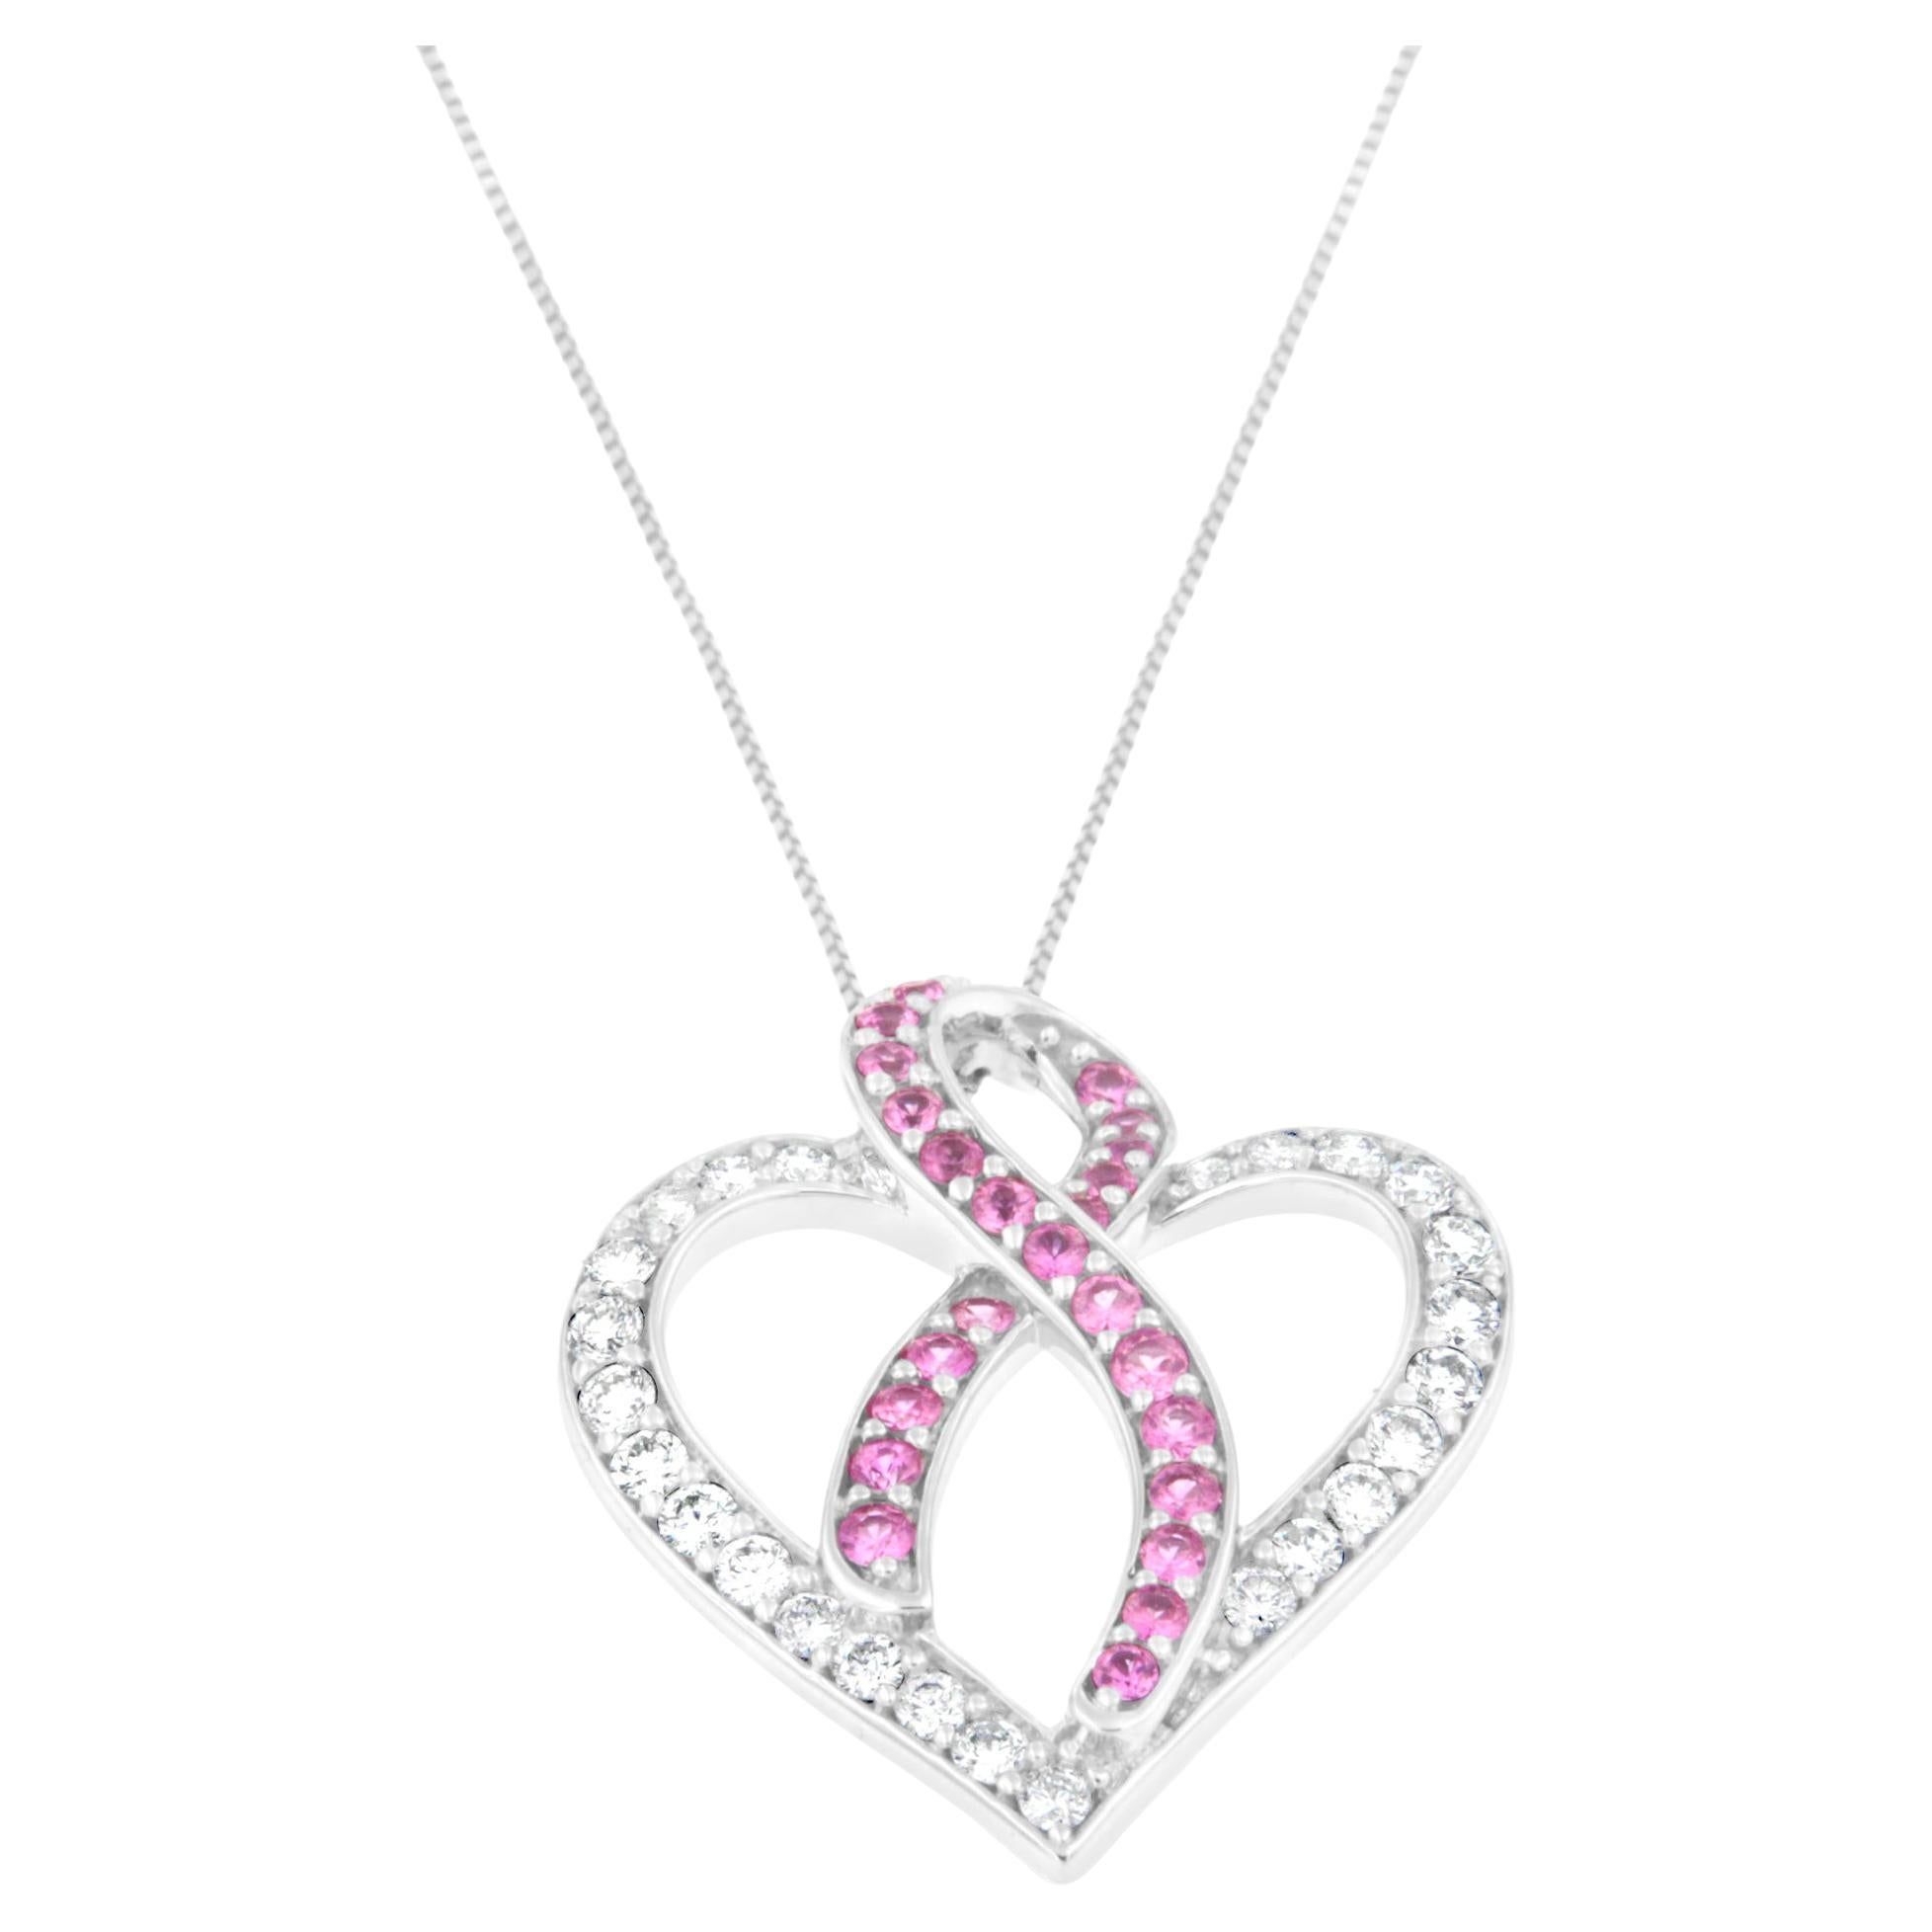 14K White Gold 1/2 Carat Diamond and Pink Sapphire Gemstone Pendant Necklace